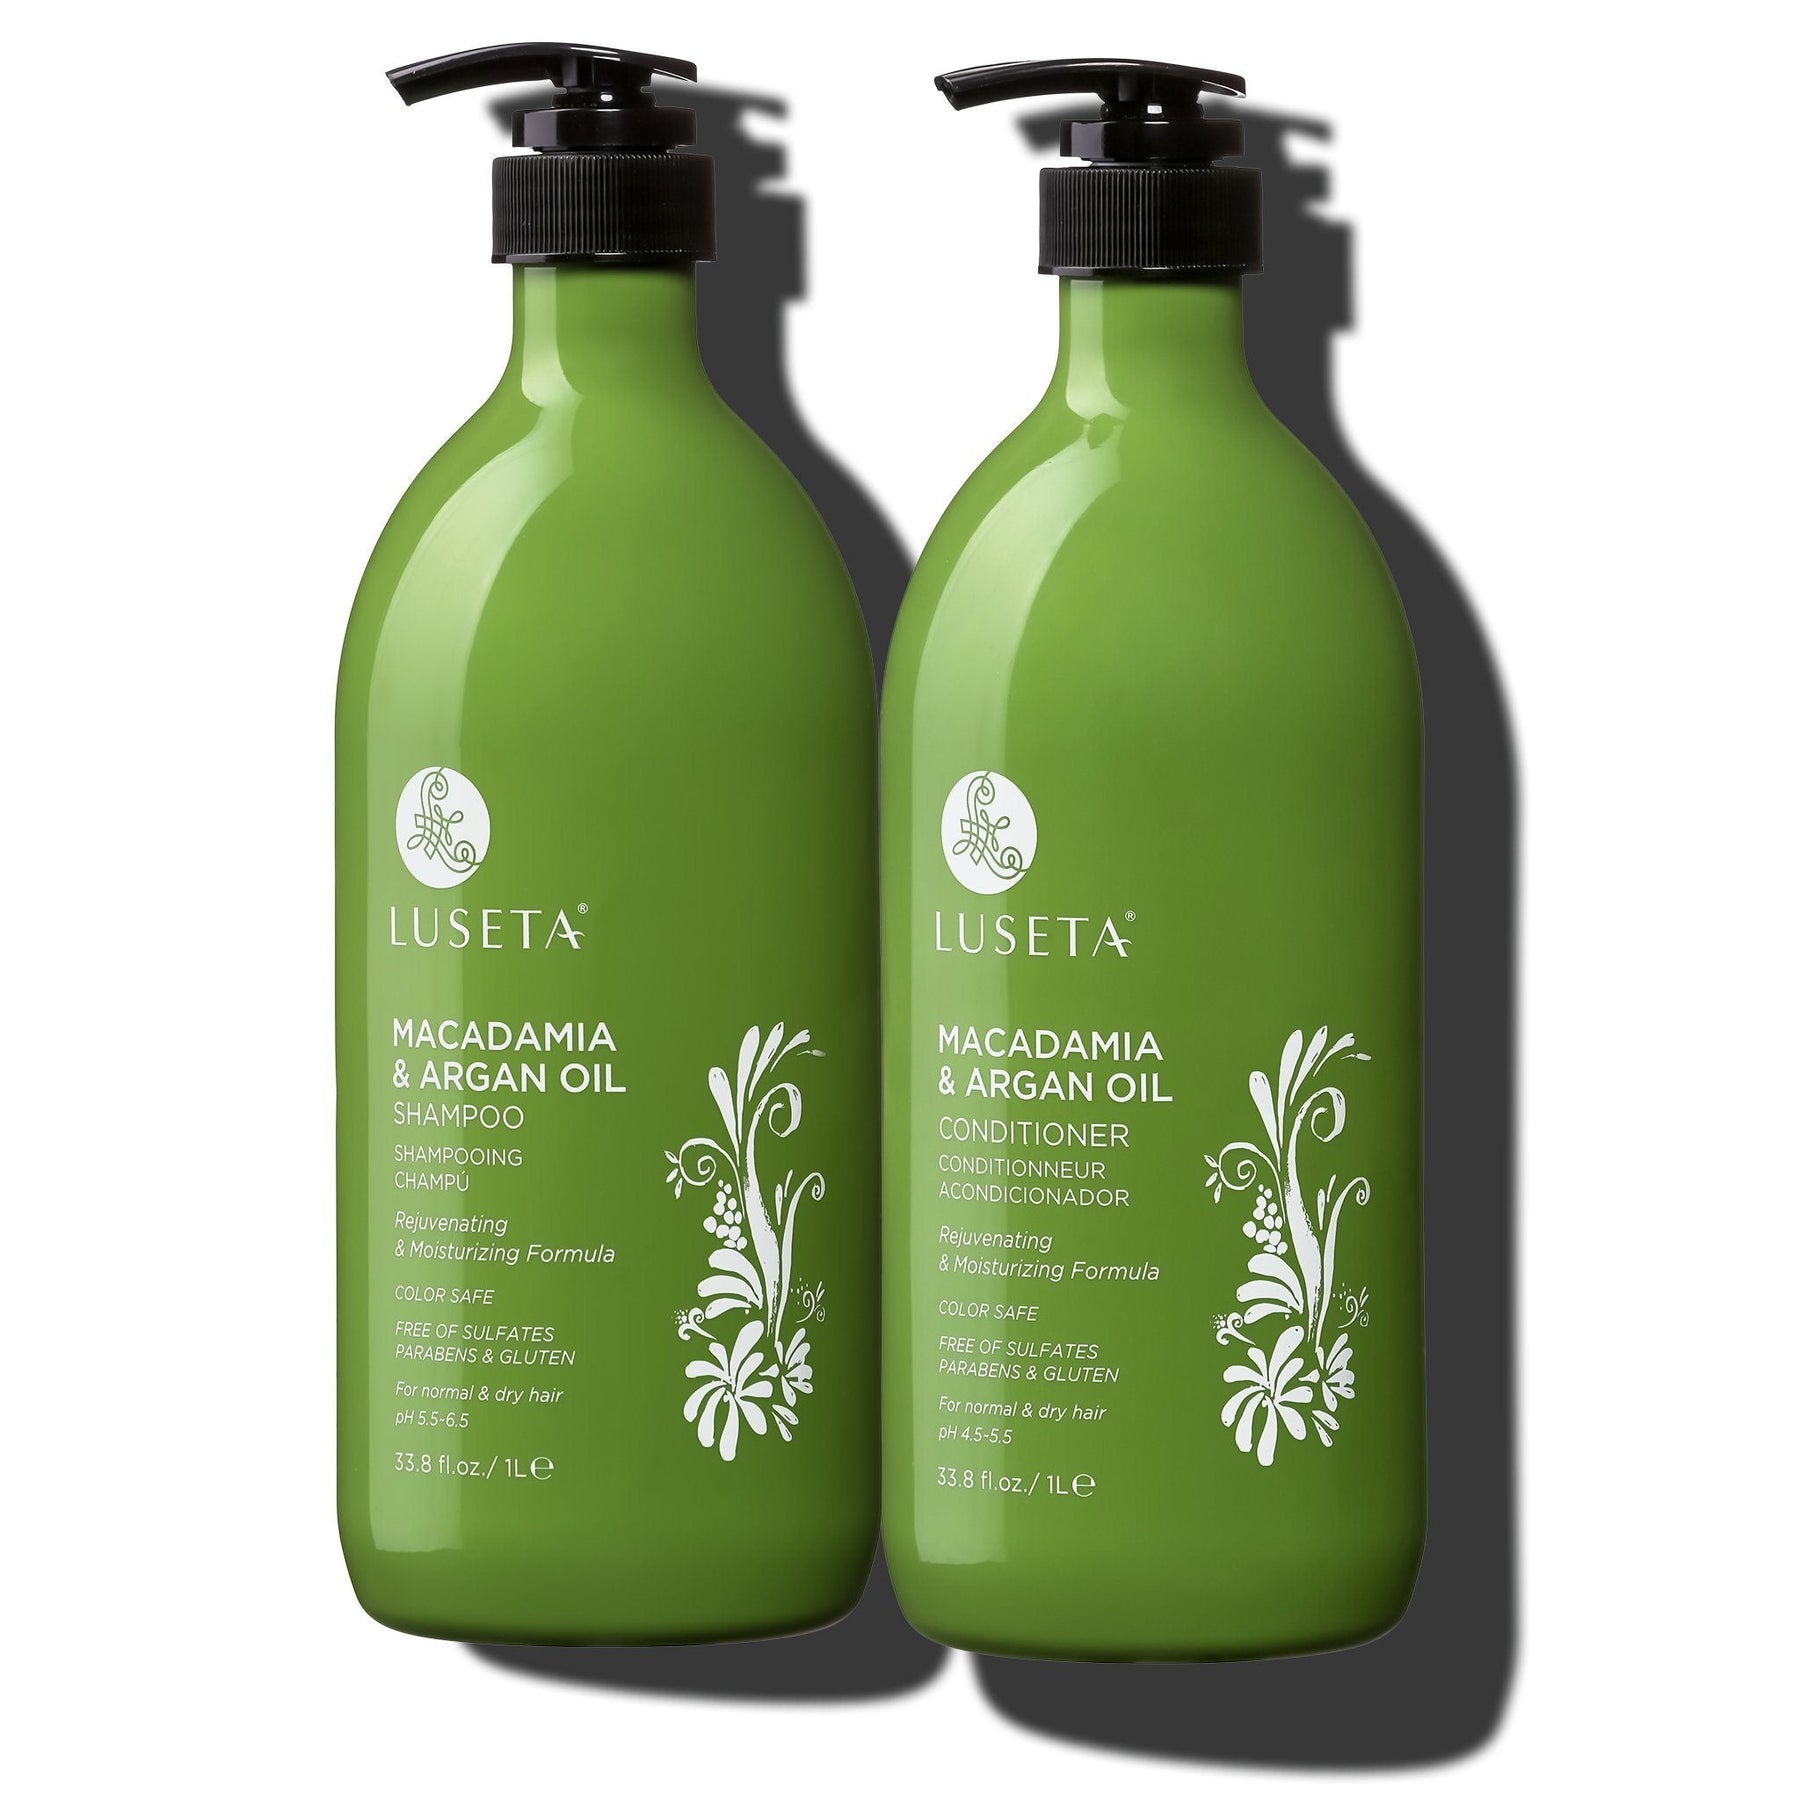 Macadamia & Argan Oil Bundle - 1 x 33.8oz Shampoo & Conditioner Set - by Luseta Beauty |ProCare Outlet|